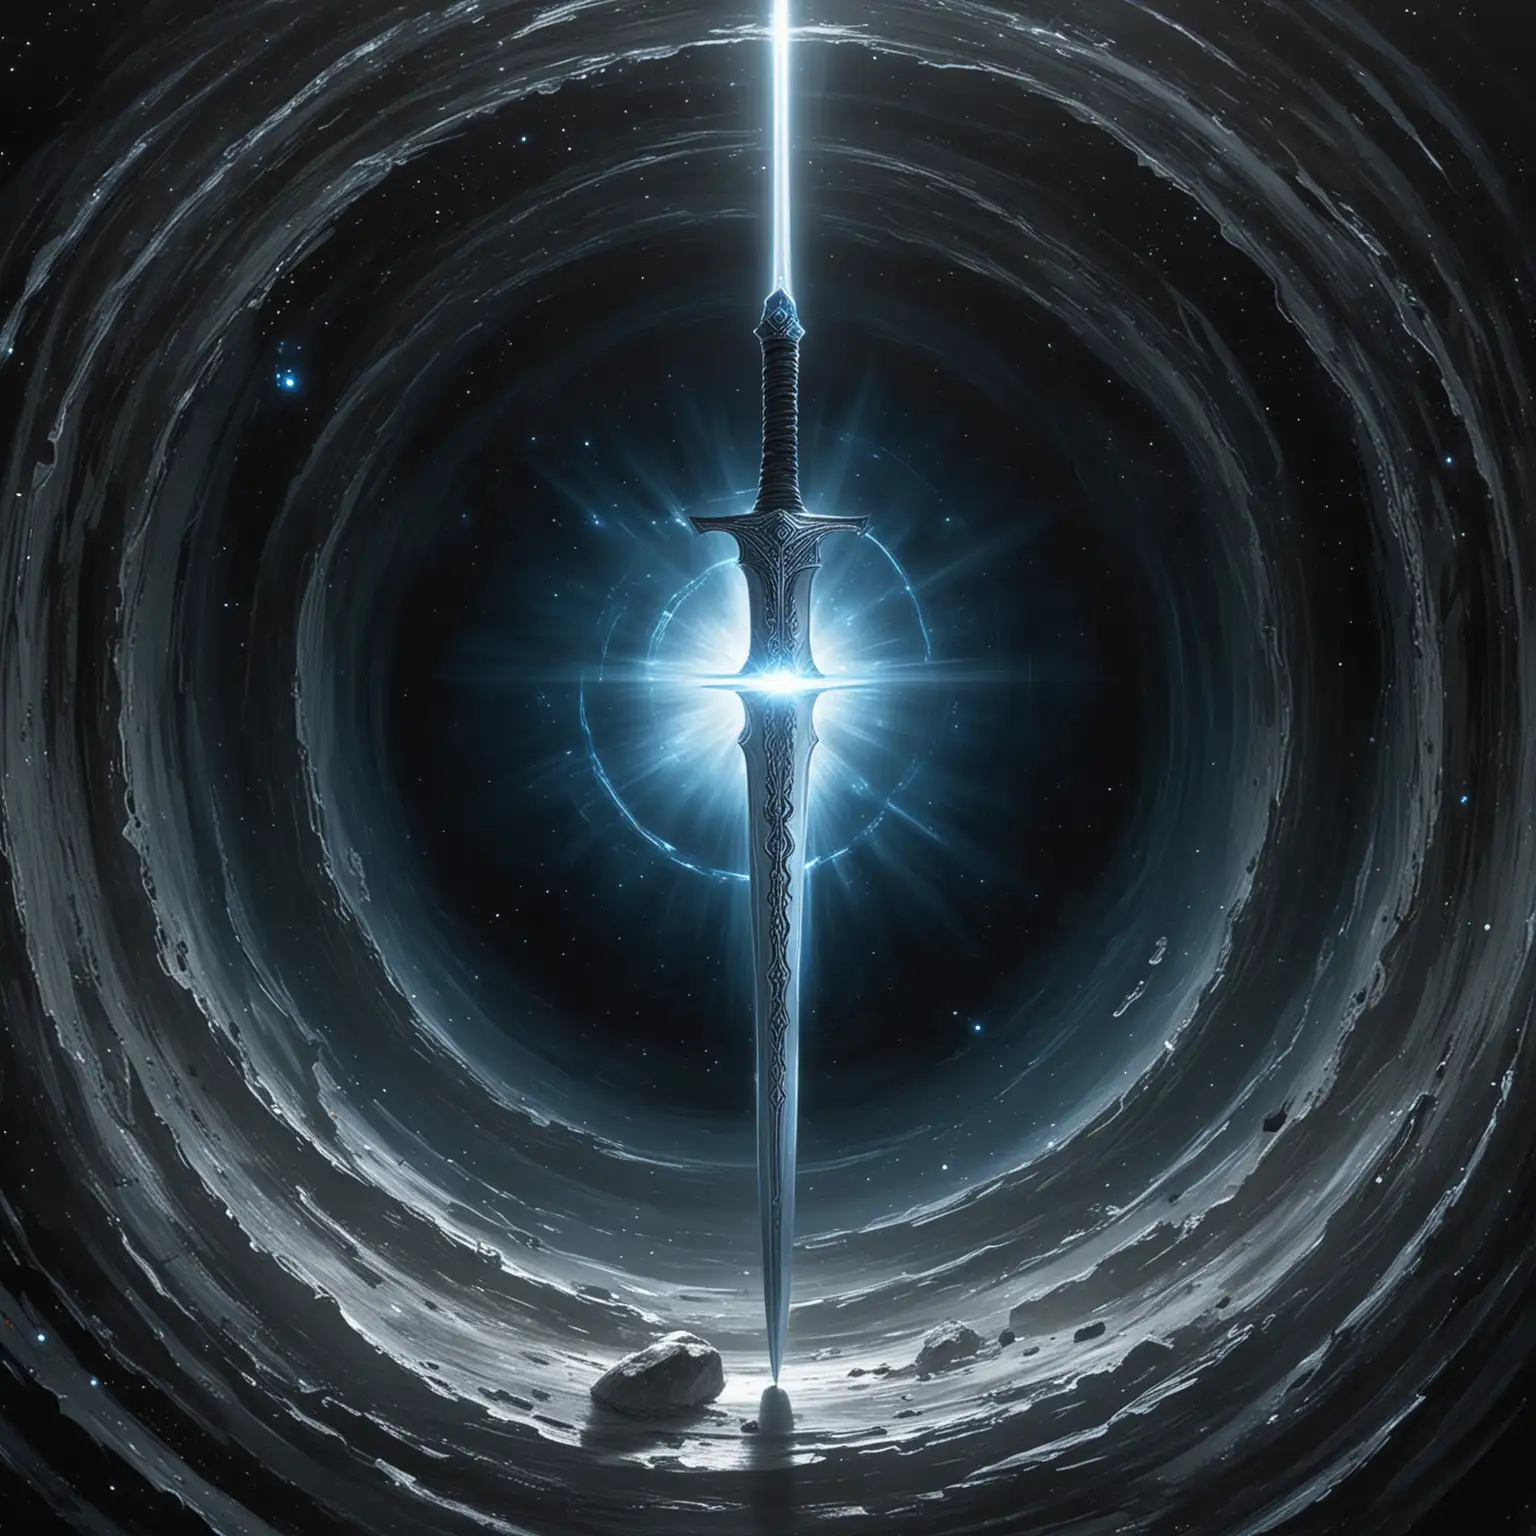 Black hole, silver-blue light, silver sword